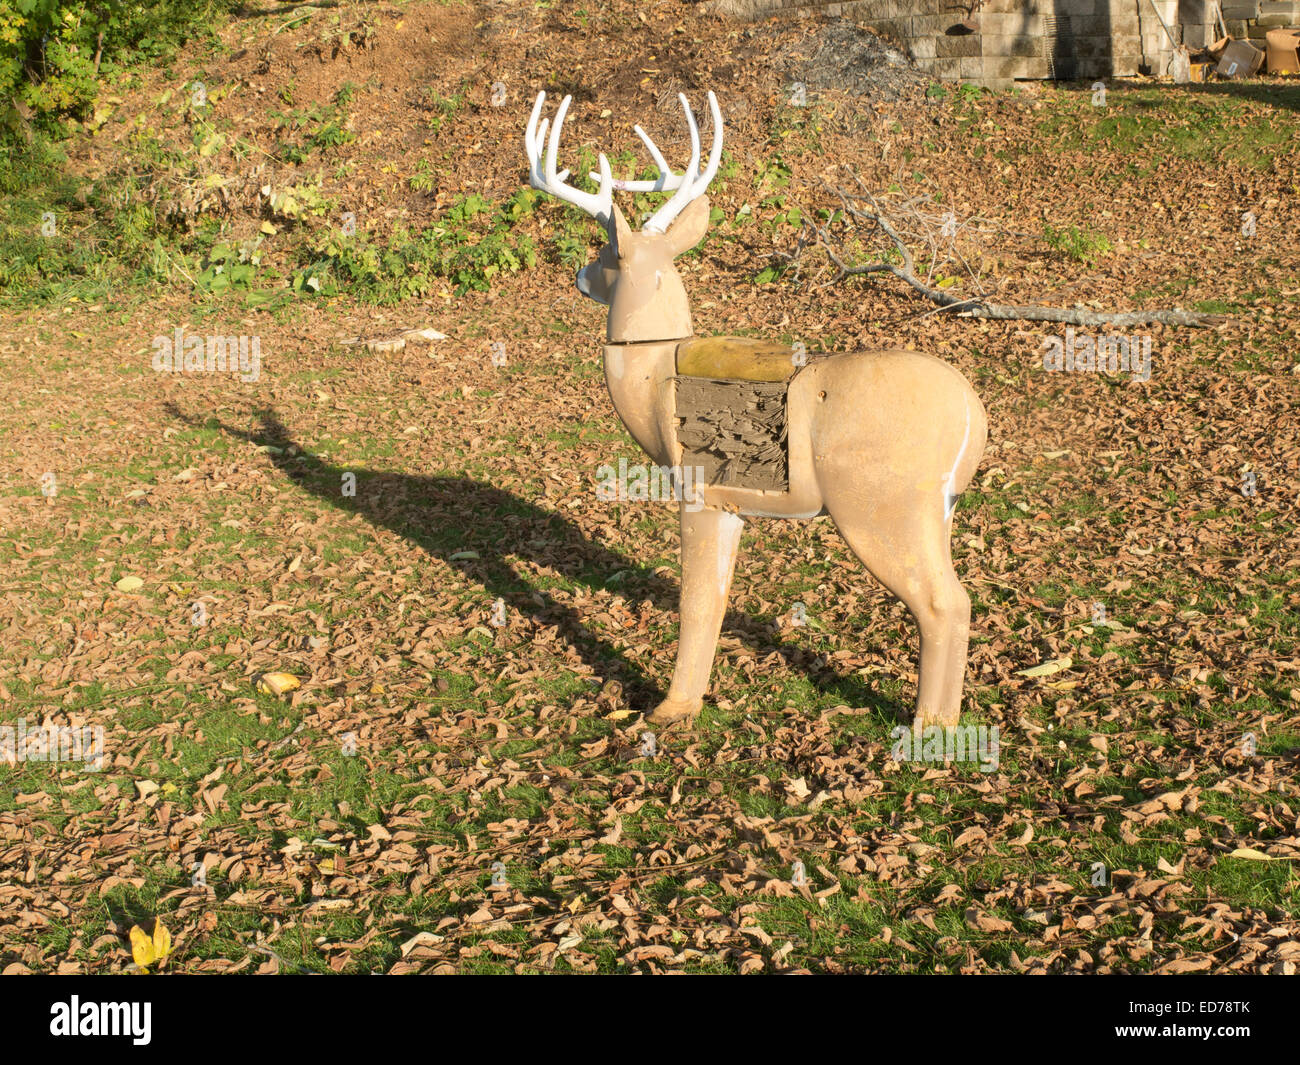 A deer practice target stands in the autumn sun in rural Massachusetts. Stock Photo